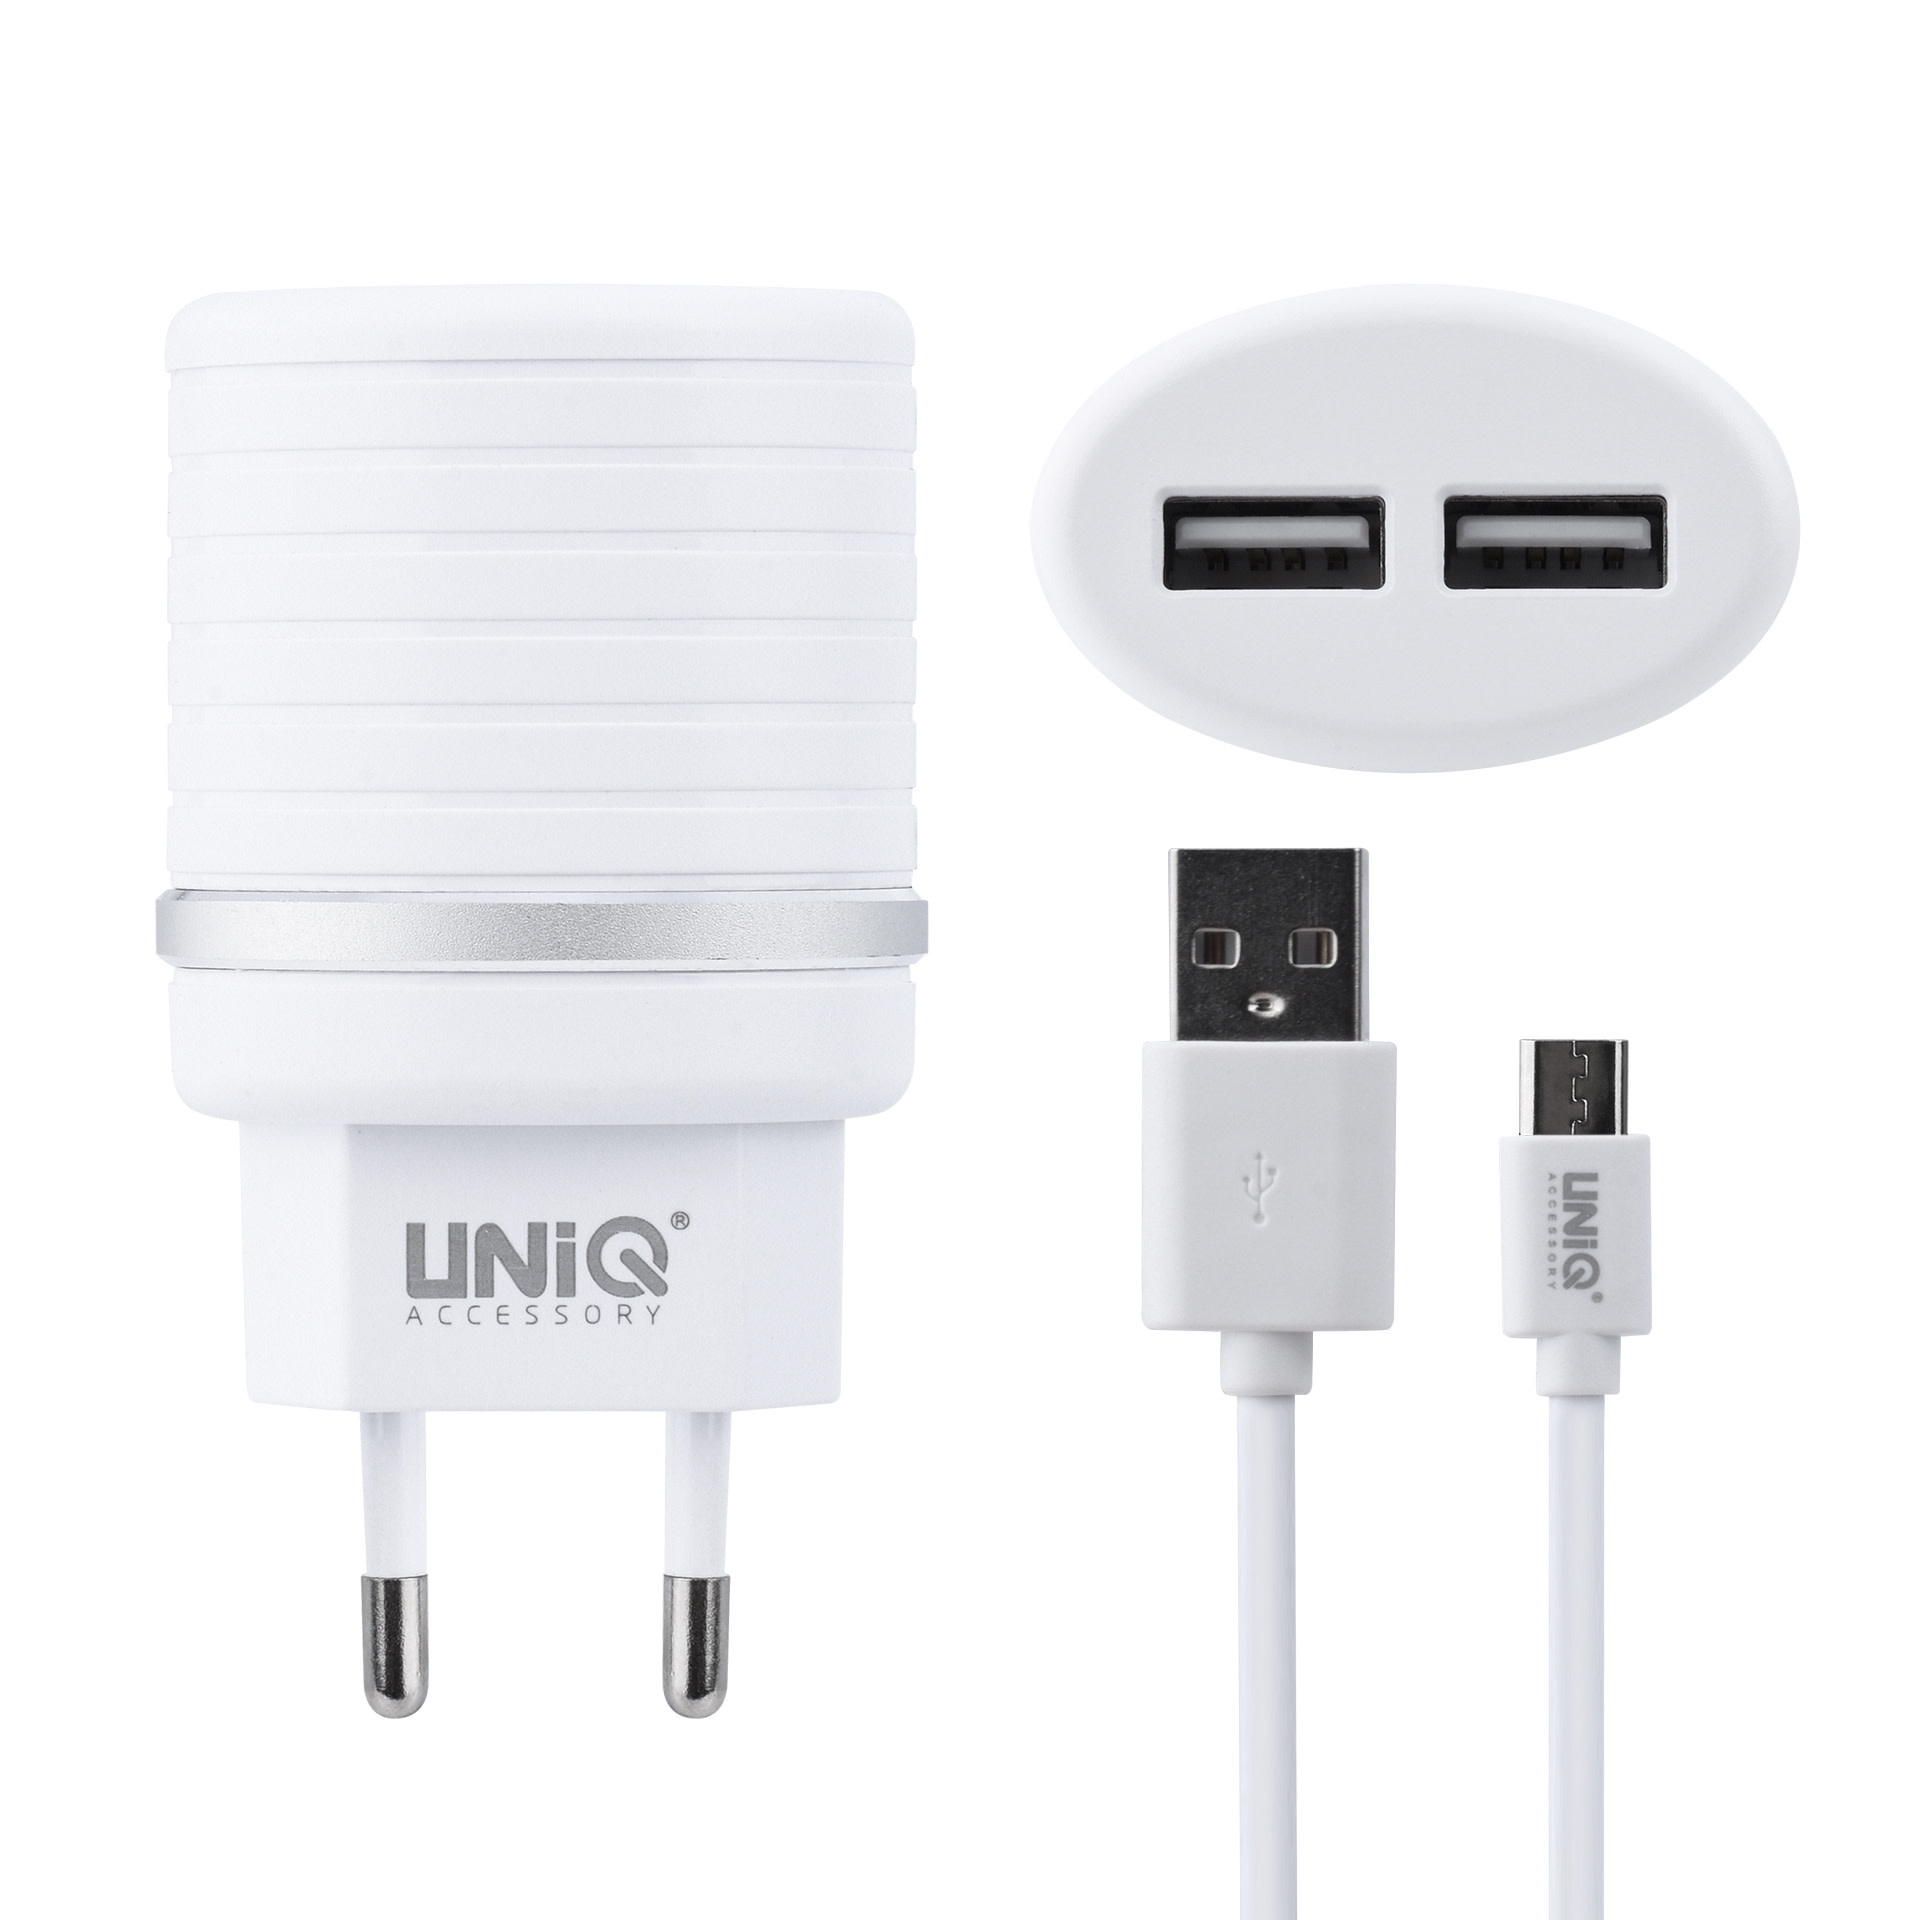 UNIQ Accessory Dual Port 2.4A töltő - Lightning USB Fe